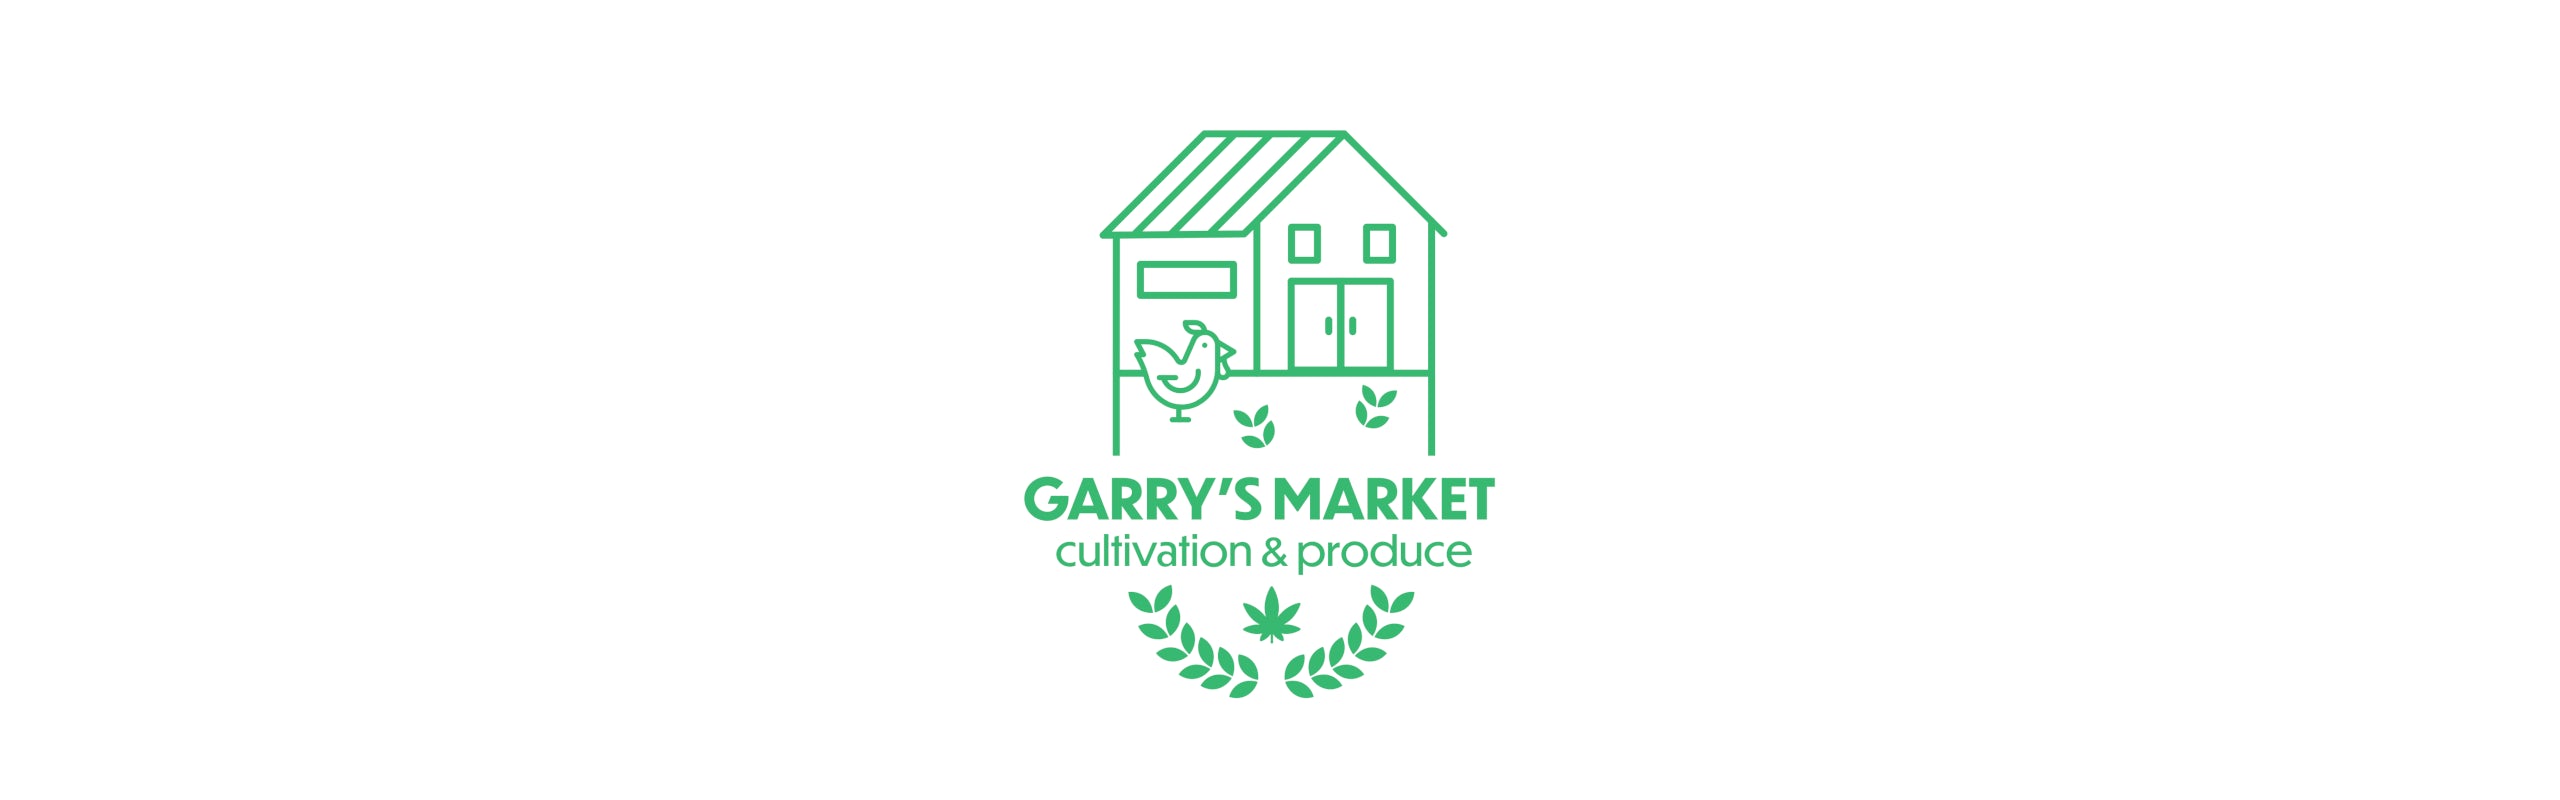 Garys Market banner